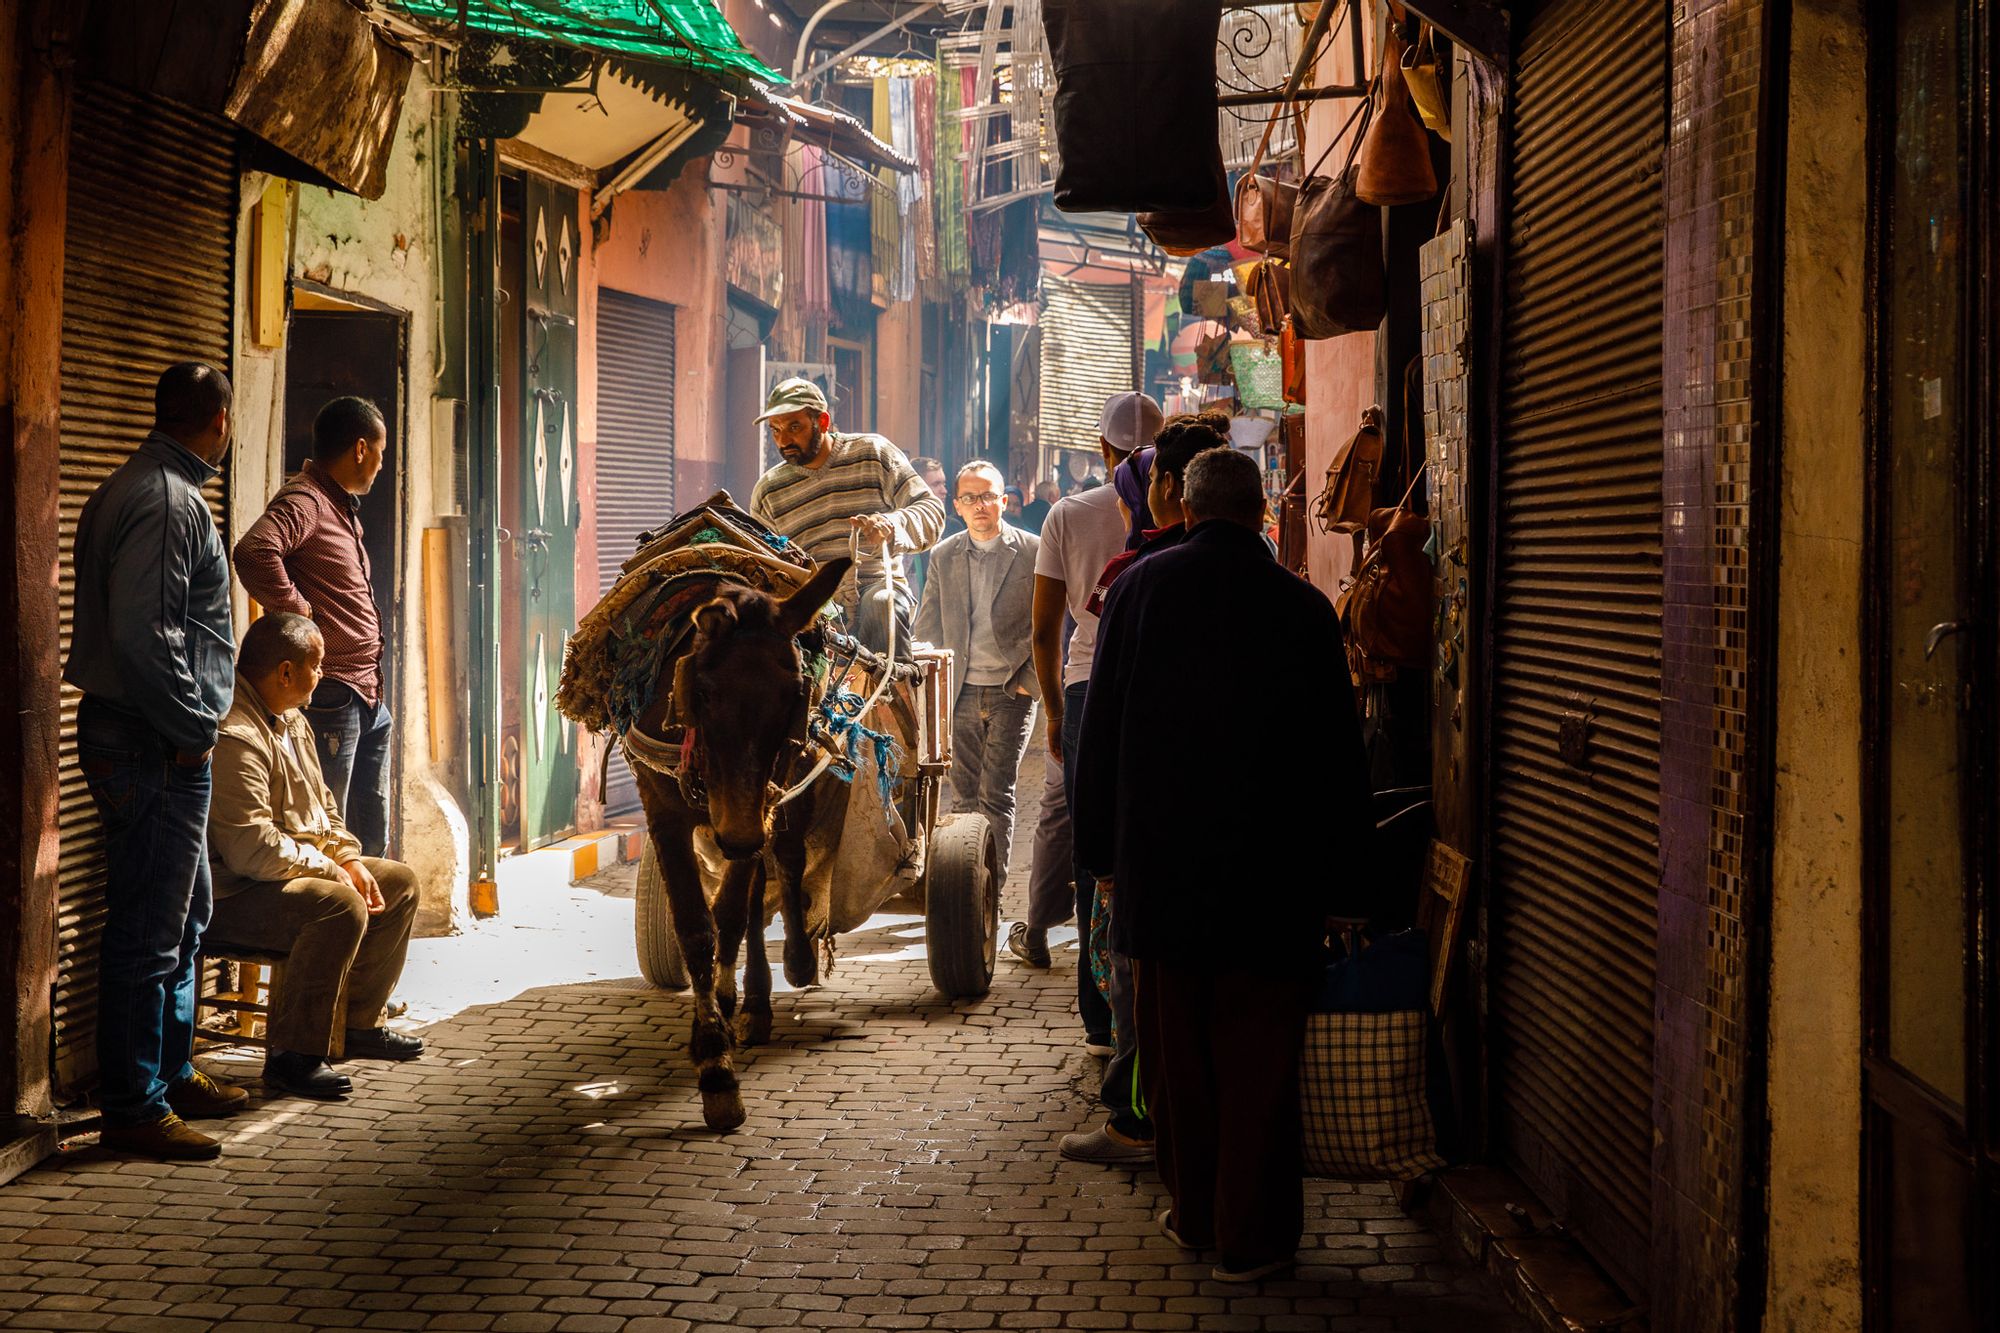 A man rides a donkey cart through a dim lit street in Imlil, Morocco